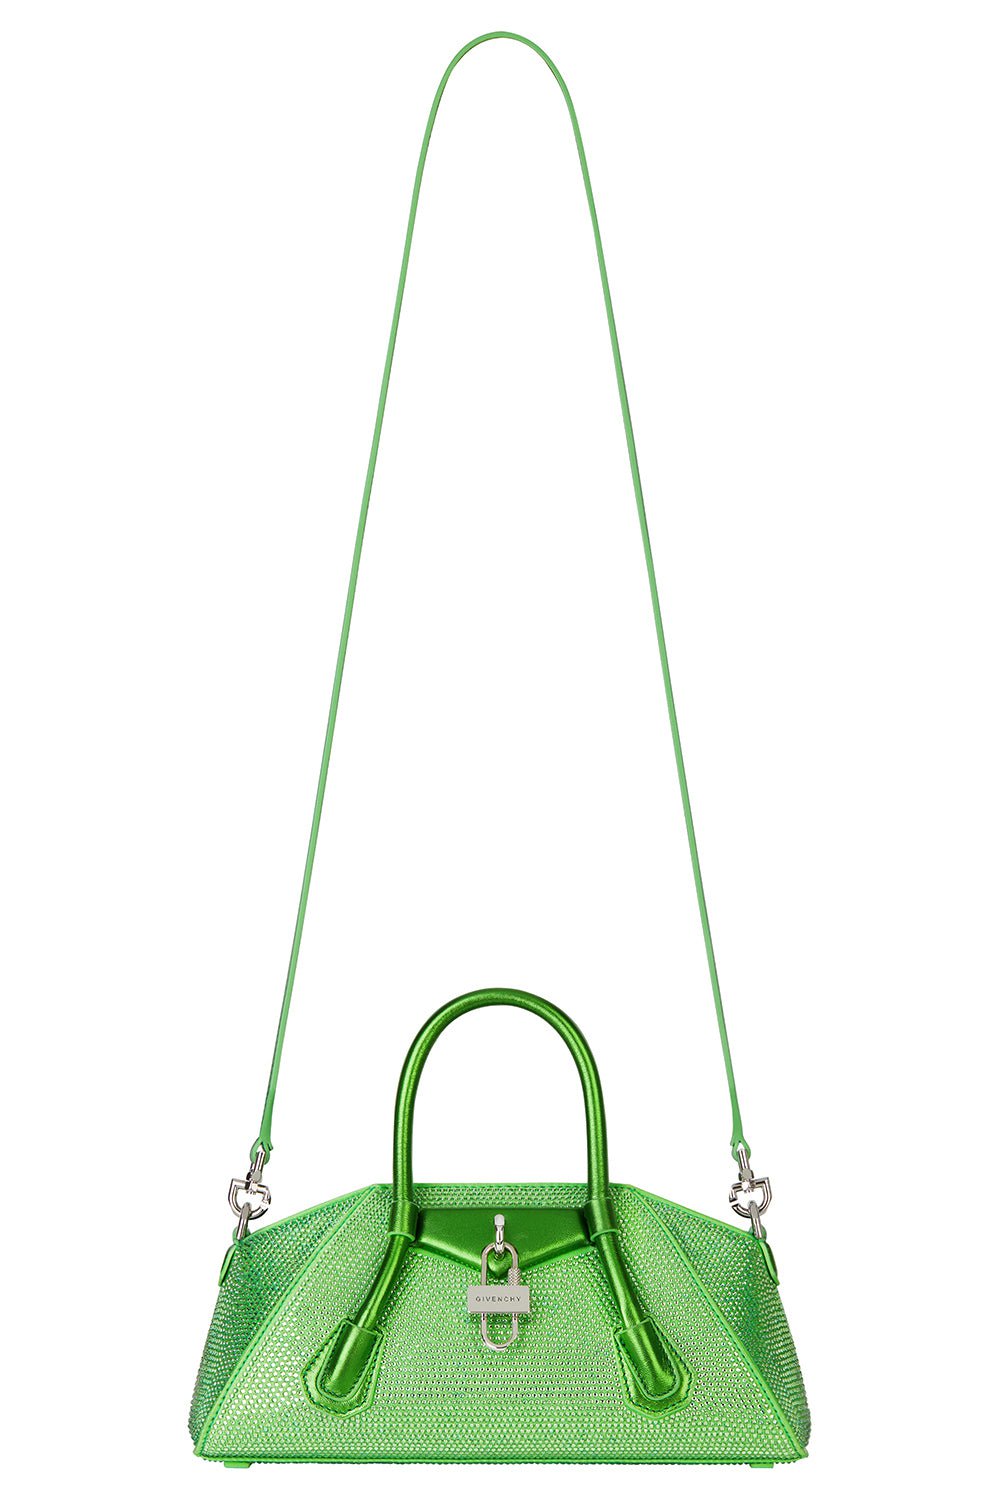 Givenchy Mini Antigona Tote in Green